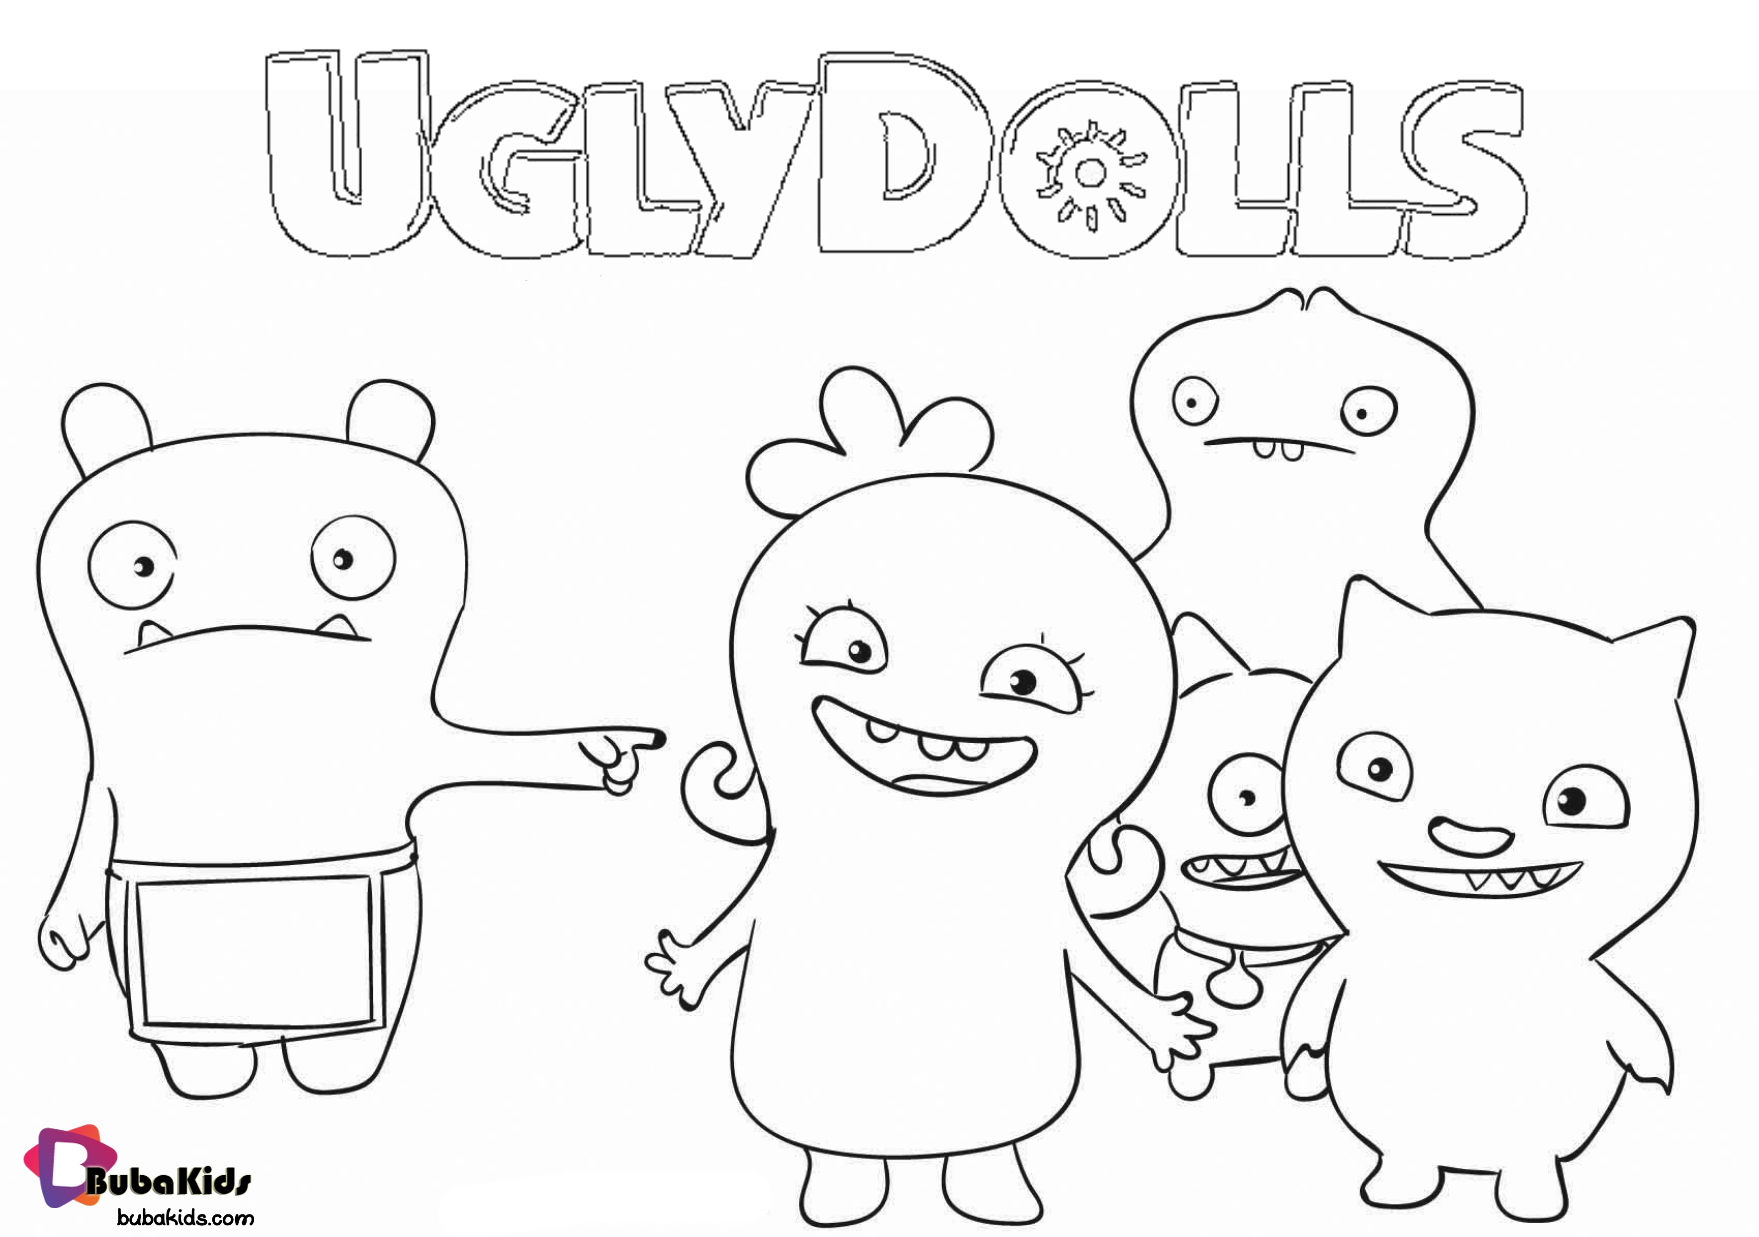 Free printable Uglydolls coloring page. Wallpaper